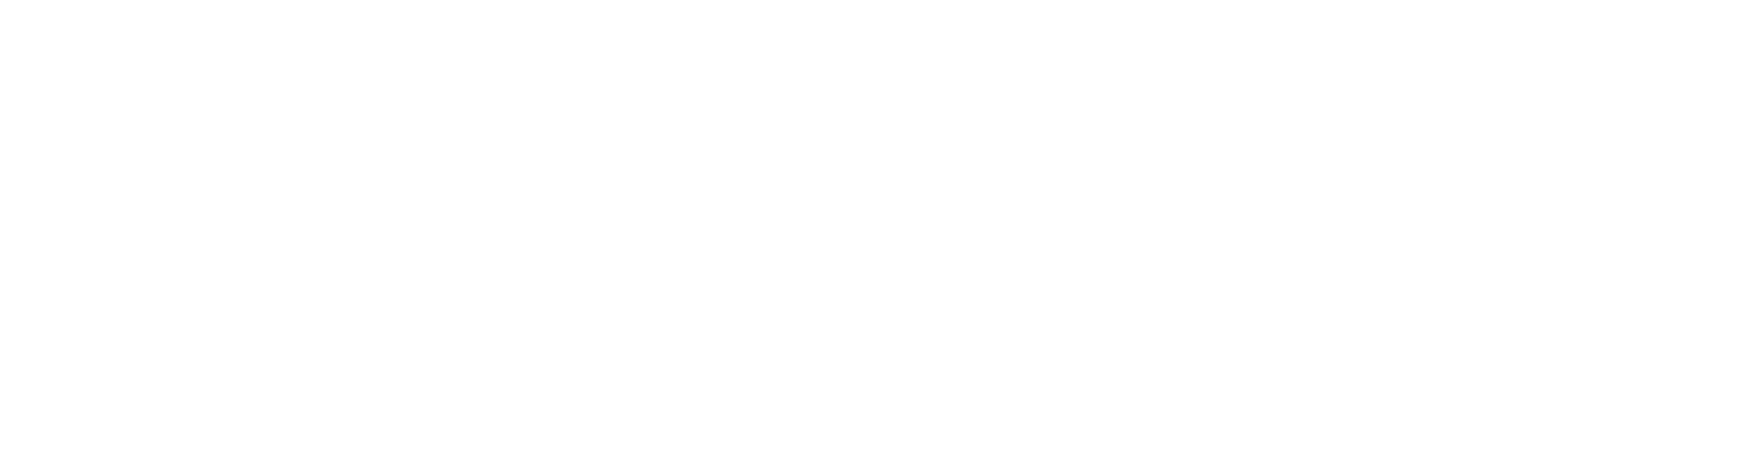 Australian Government Initiative and Inspiring Australia Logos